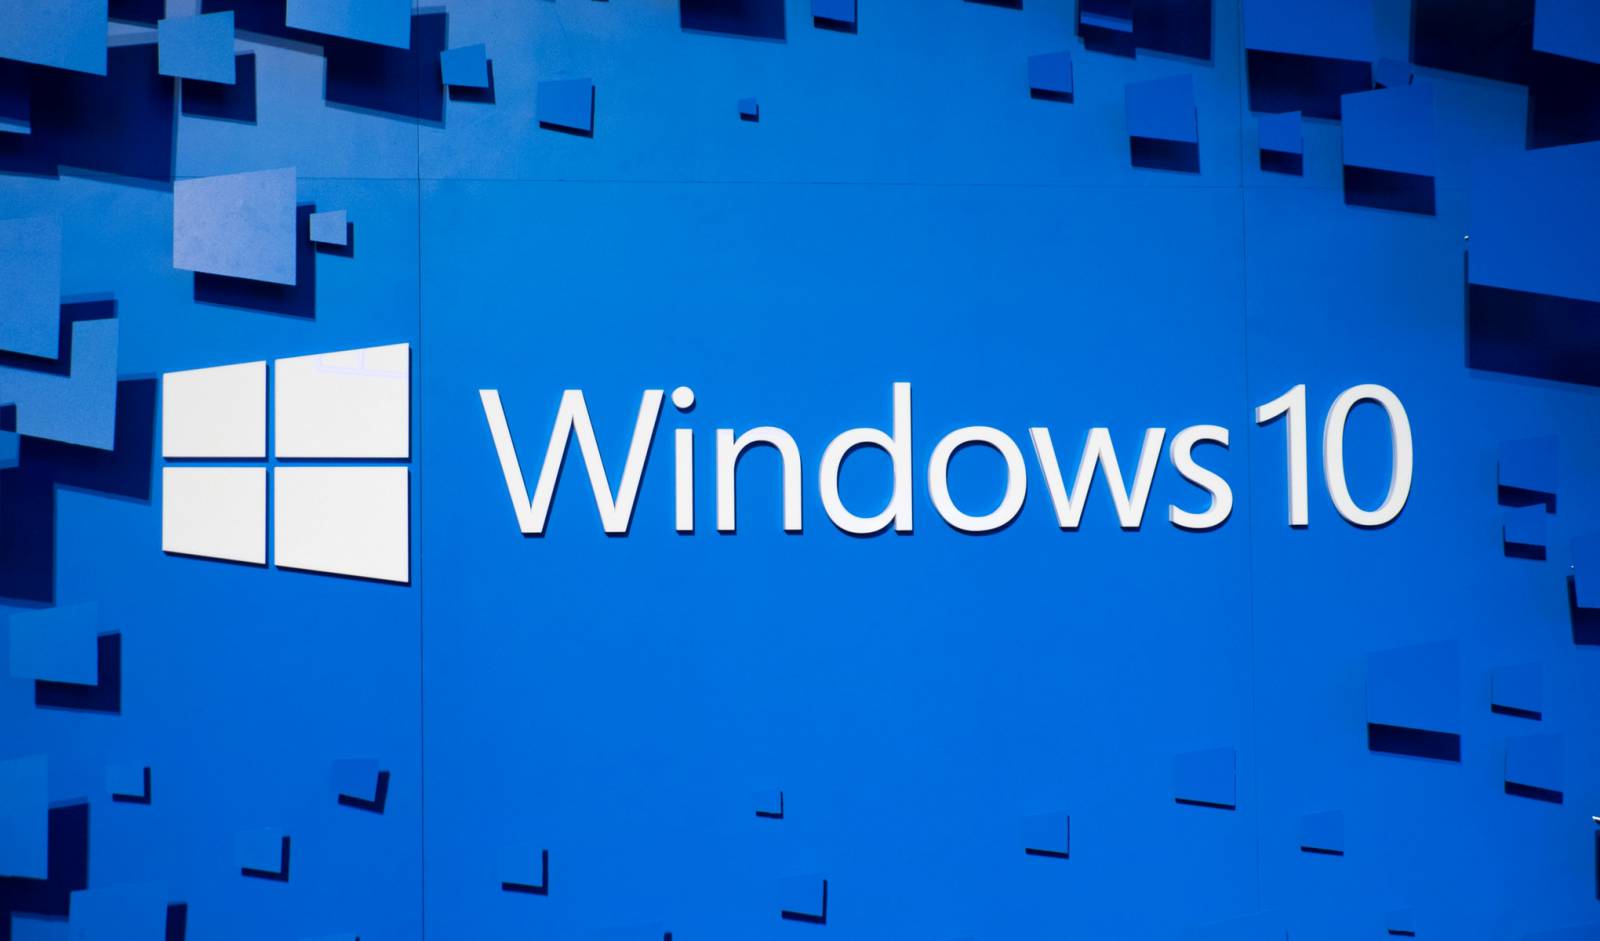 Windows 10 ATTENTION! SERIOUS PROBLEM Affecting PCs